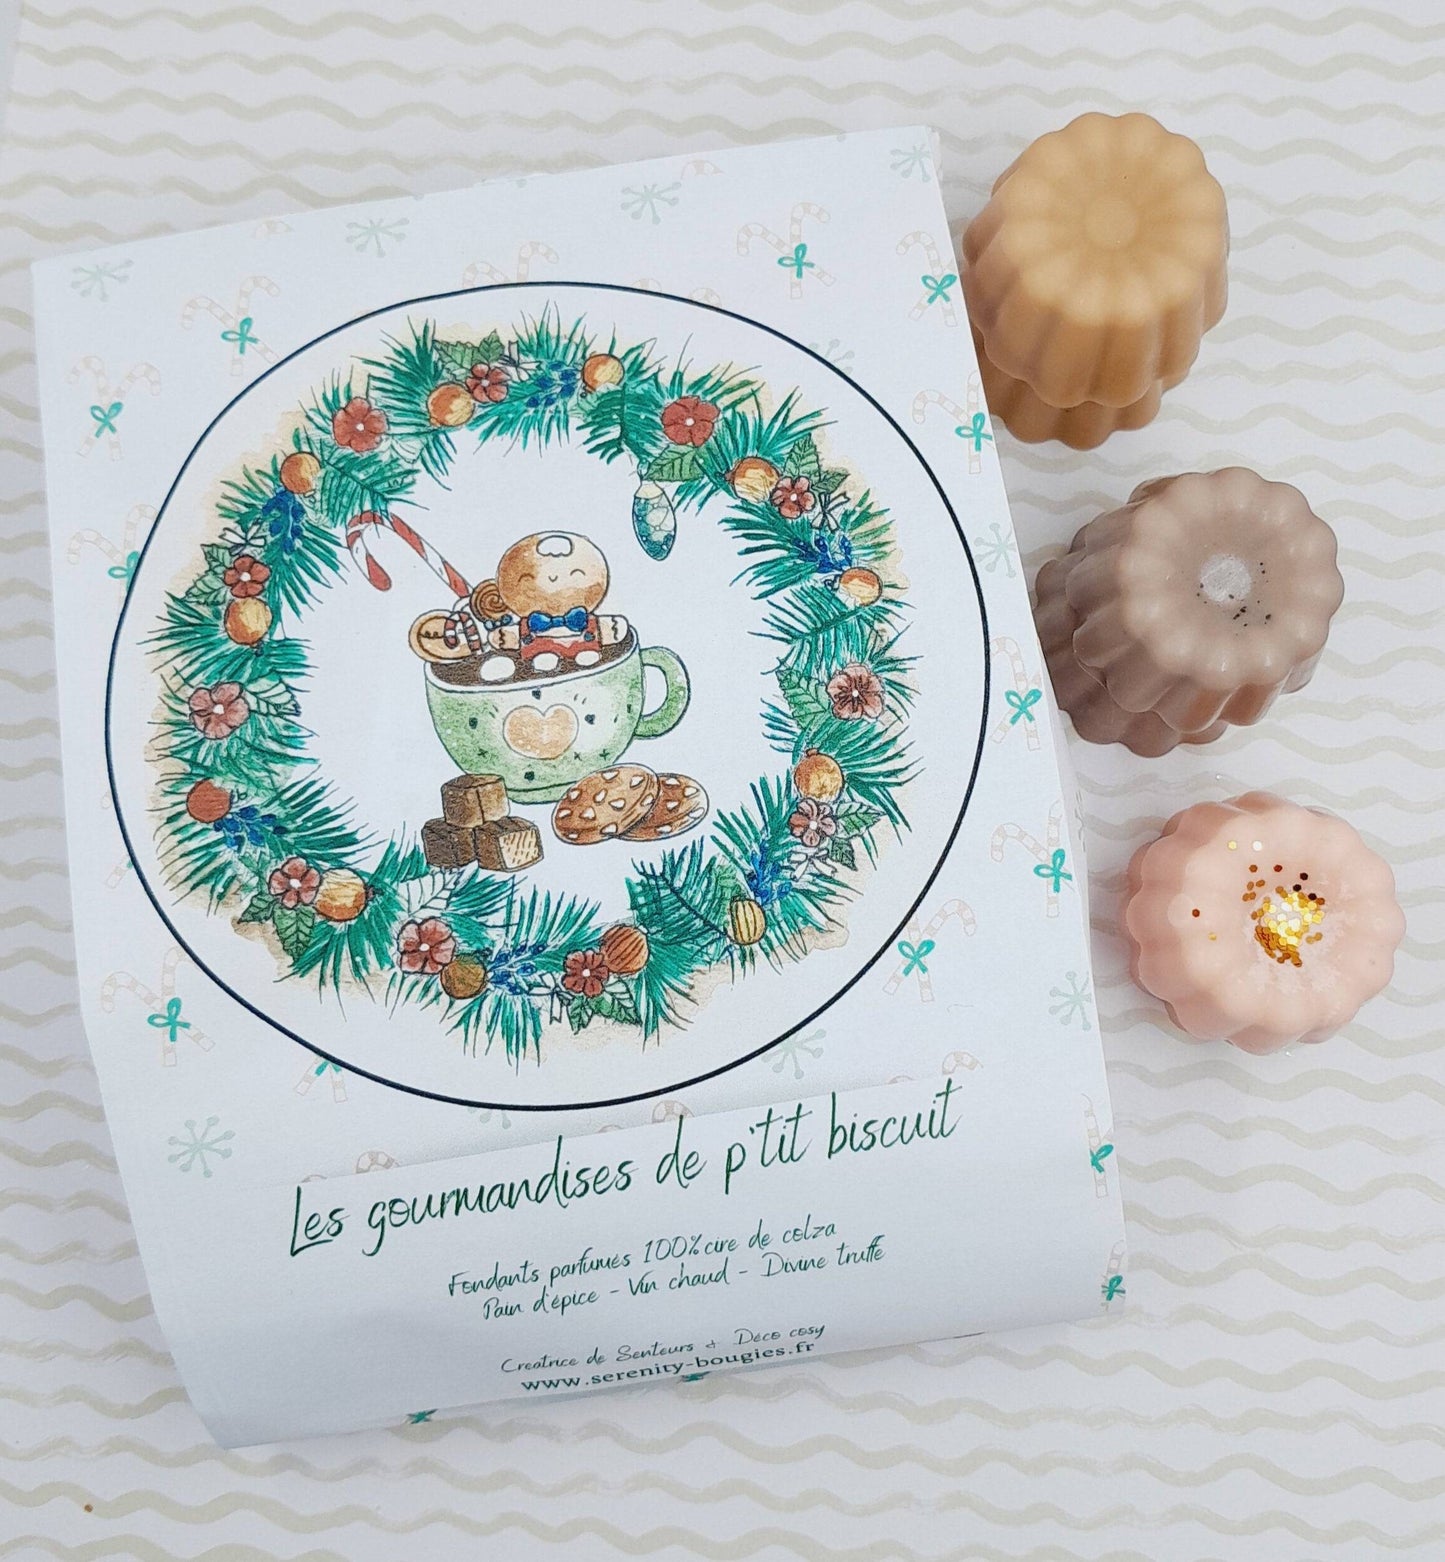 Fondant perfumado x6 en pack - Colección Les gourmandises de p'tit biscuit - edición limitada